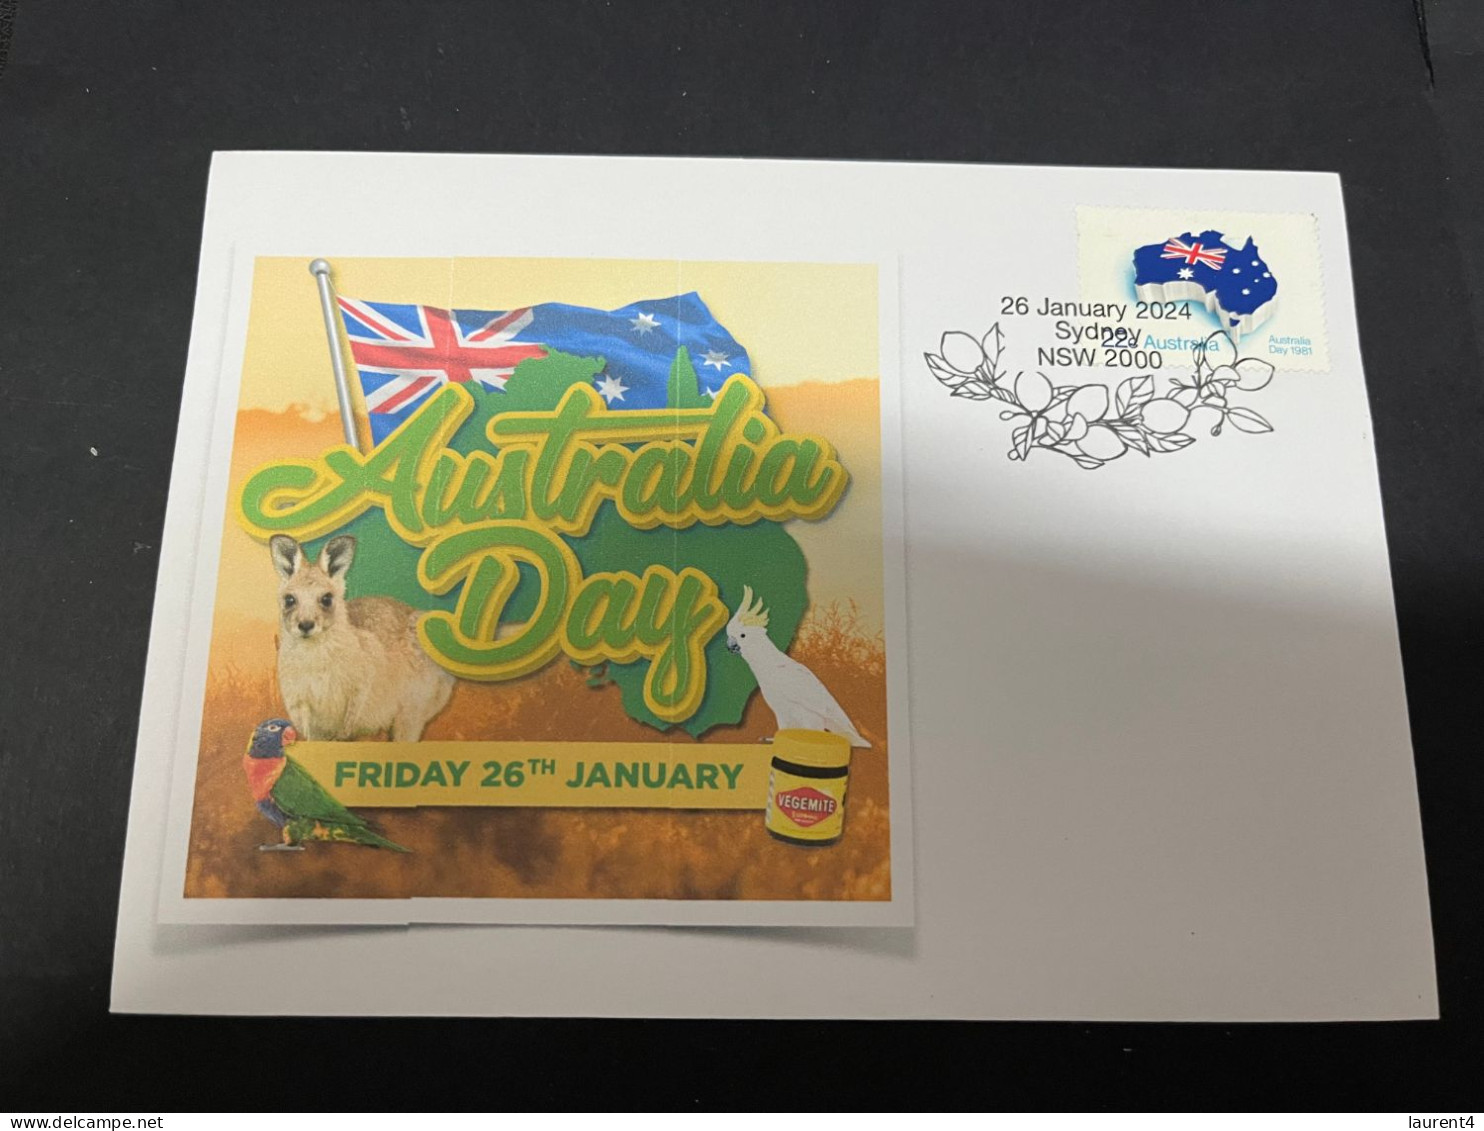 26-1-2024 (2  X 22) Australia National Day (Australia Day) With Australia Map + Flag Stamp 26-1-24 (TODAY) - Storia Postale